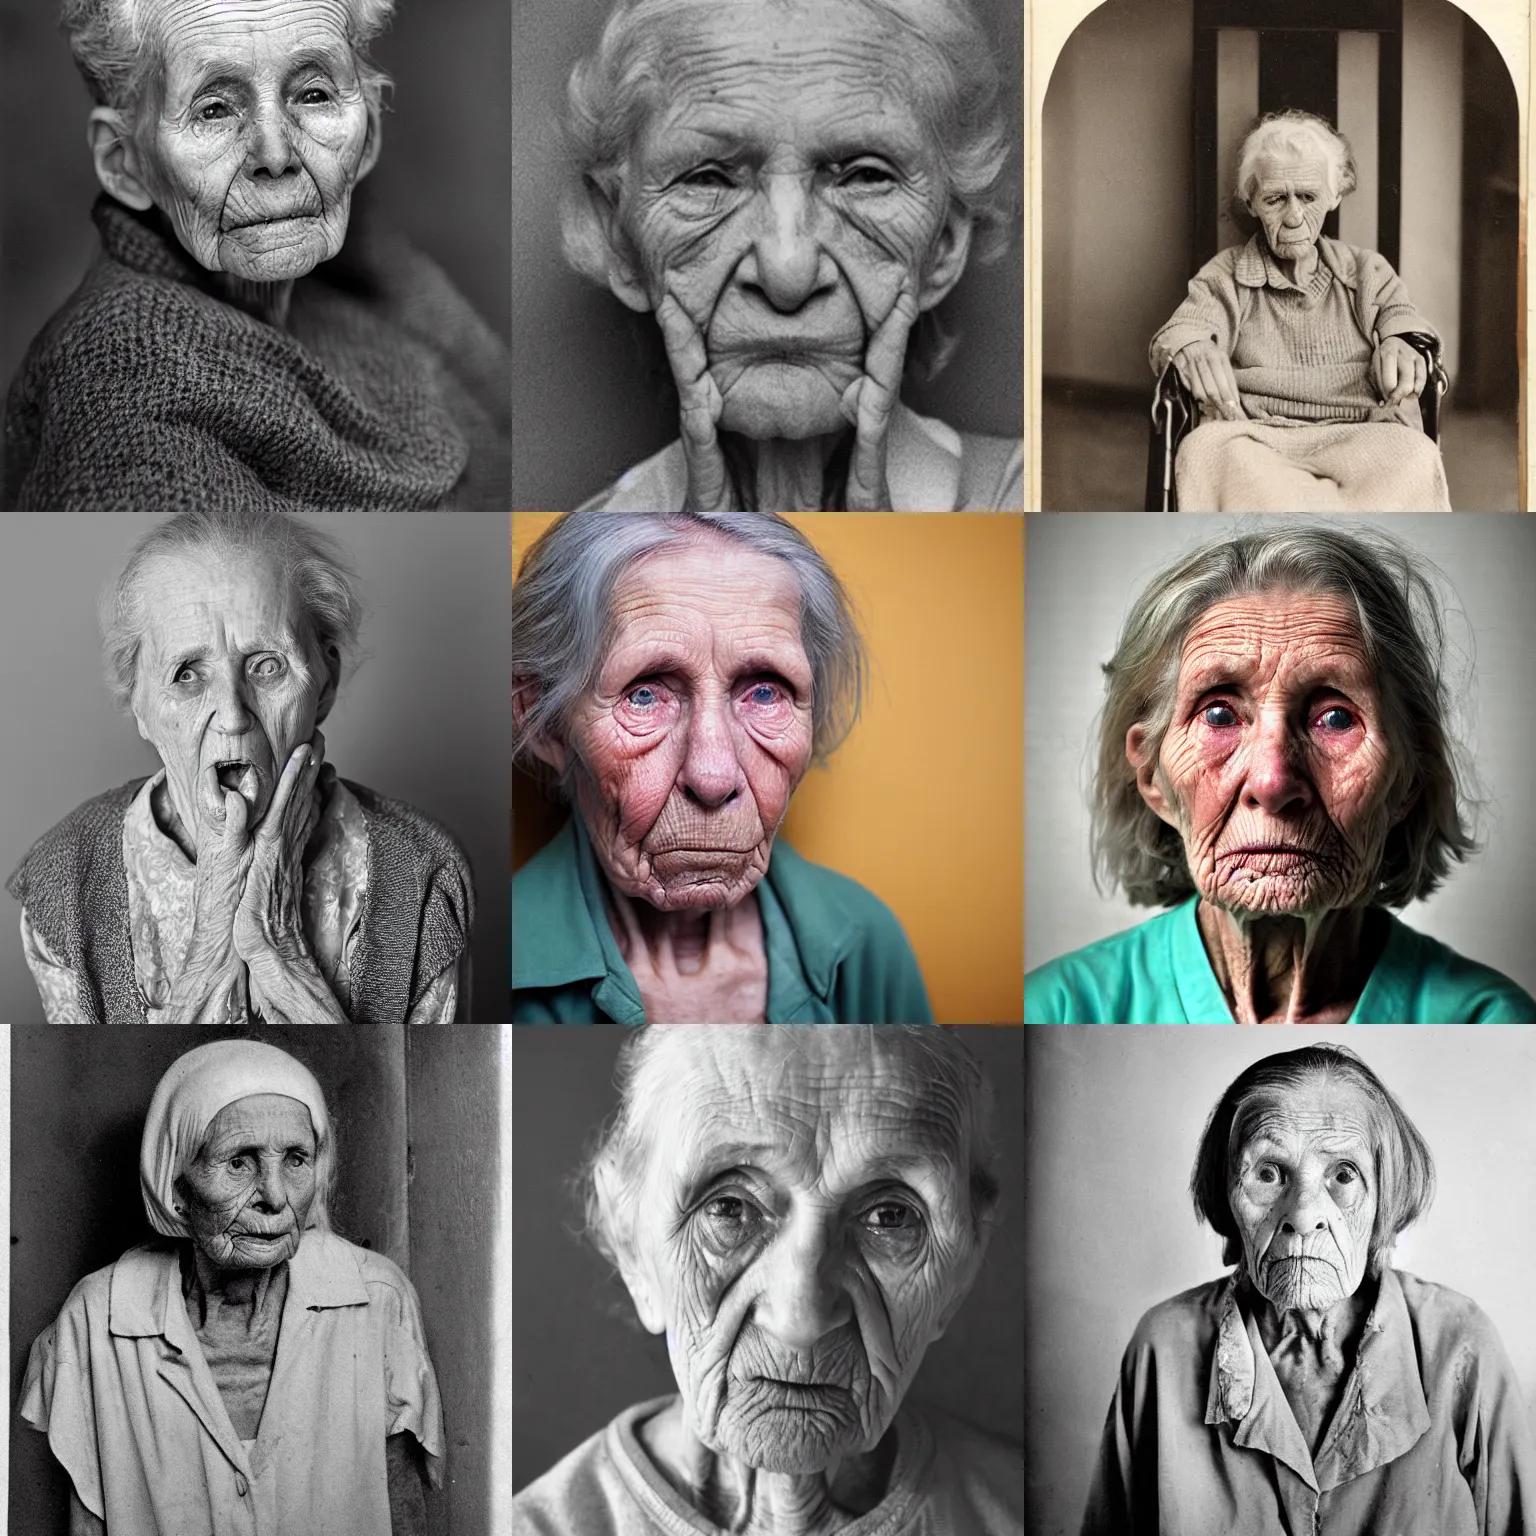 Prompt: portrait of a criminally insane elderly woman, psychology journal photograph